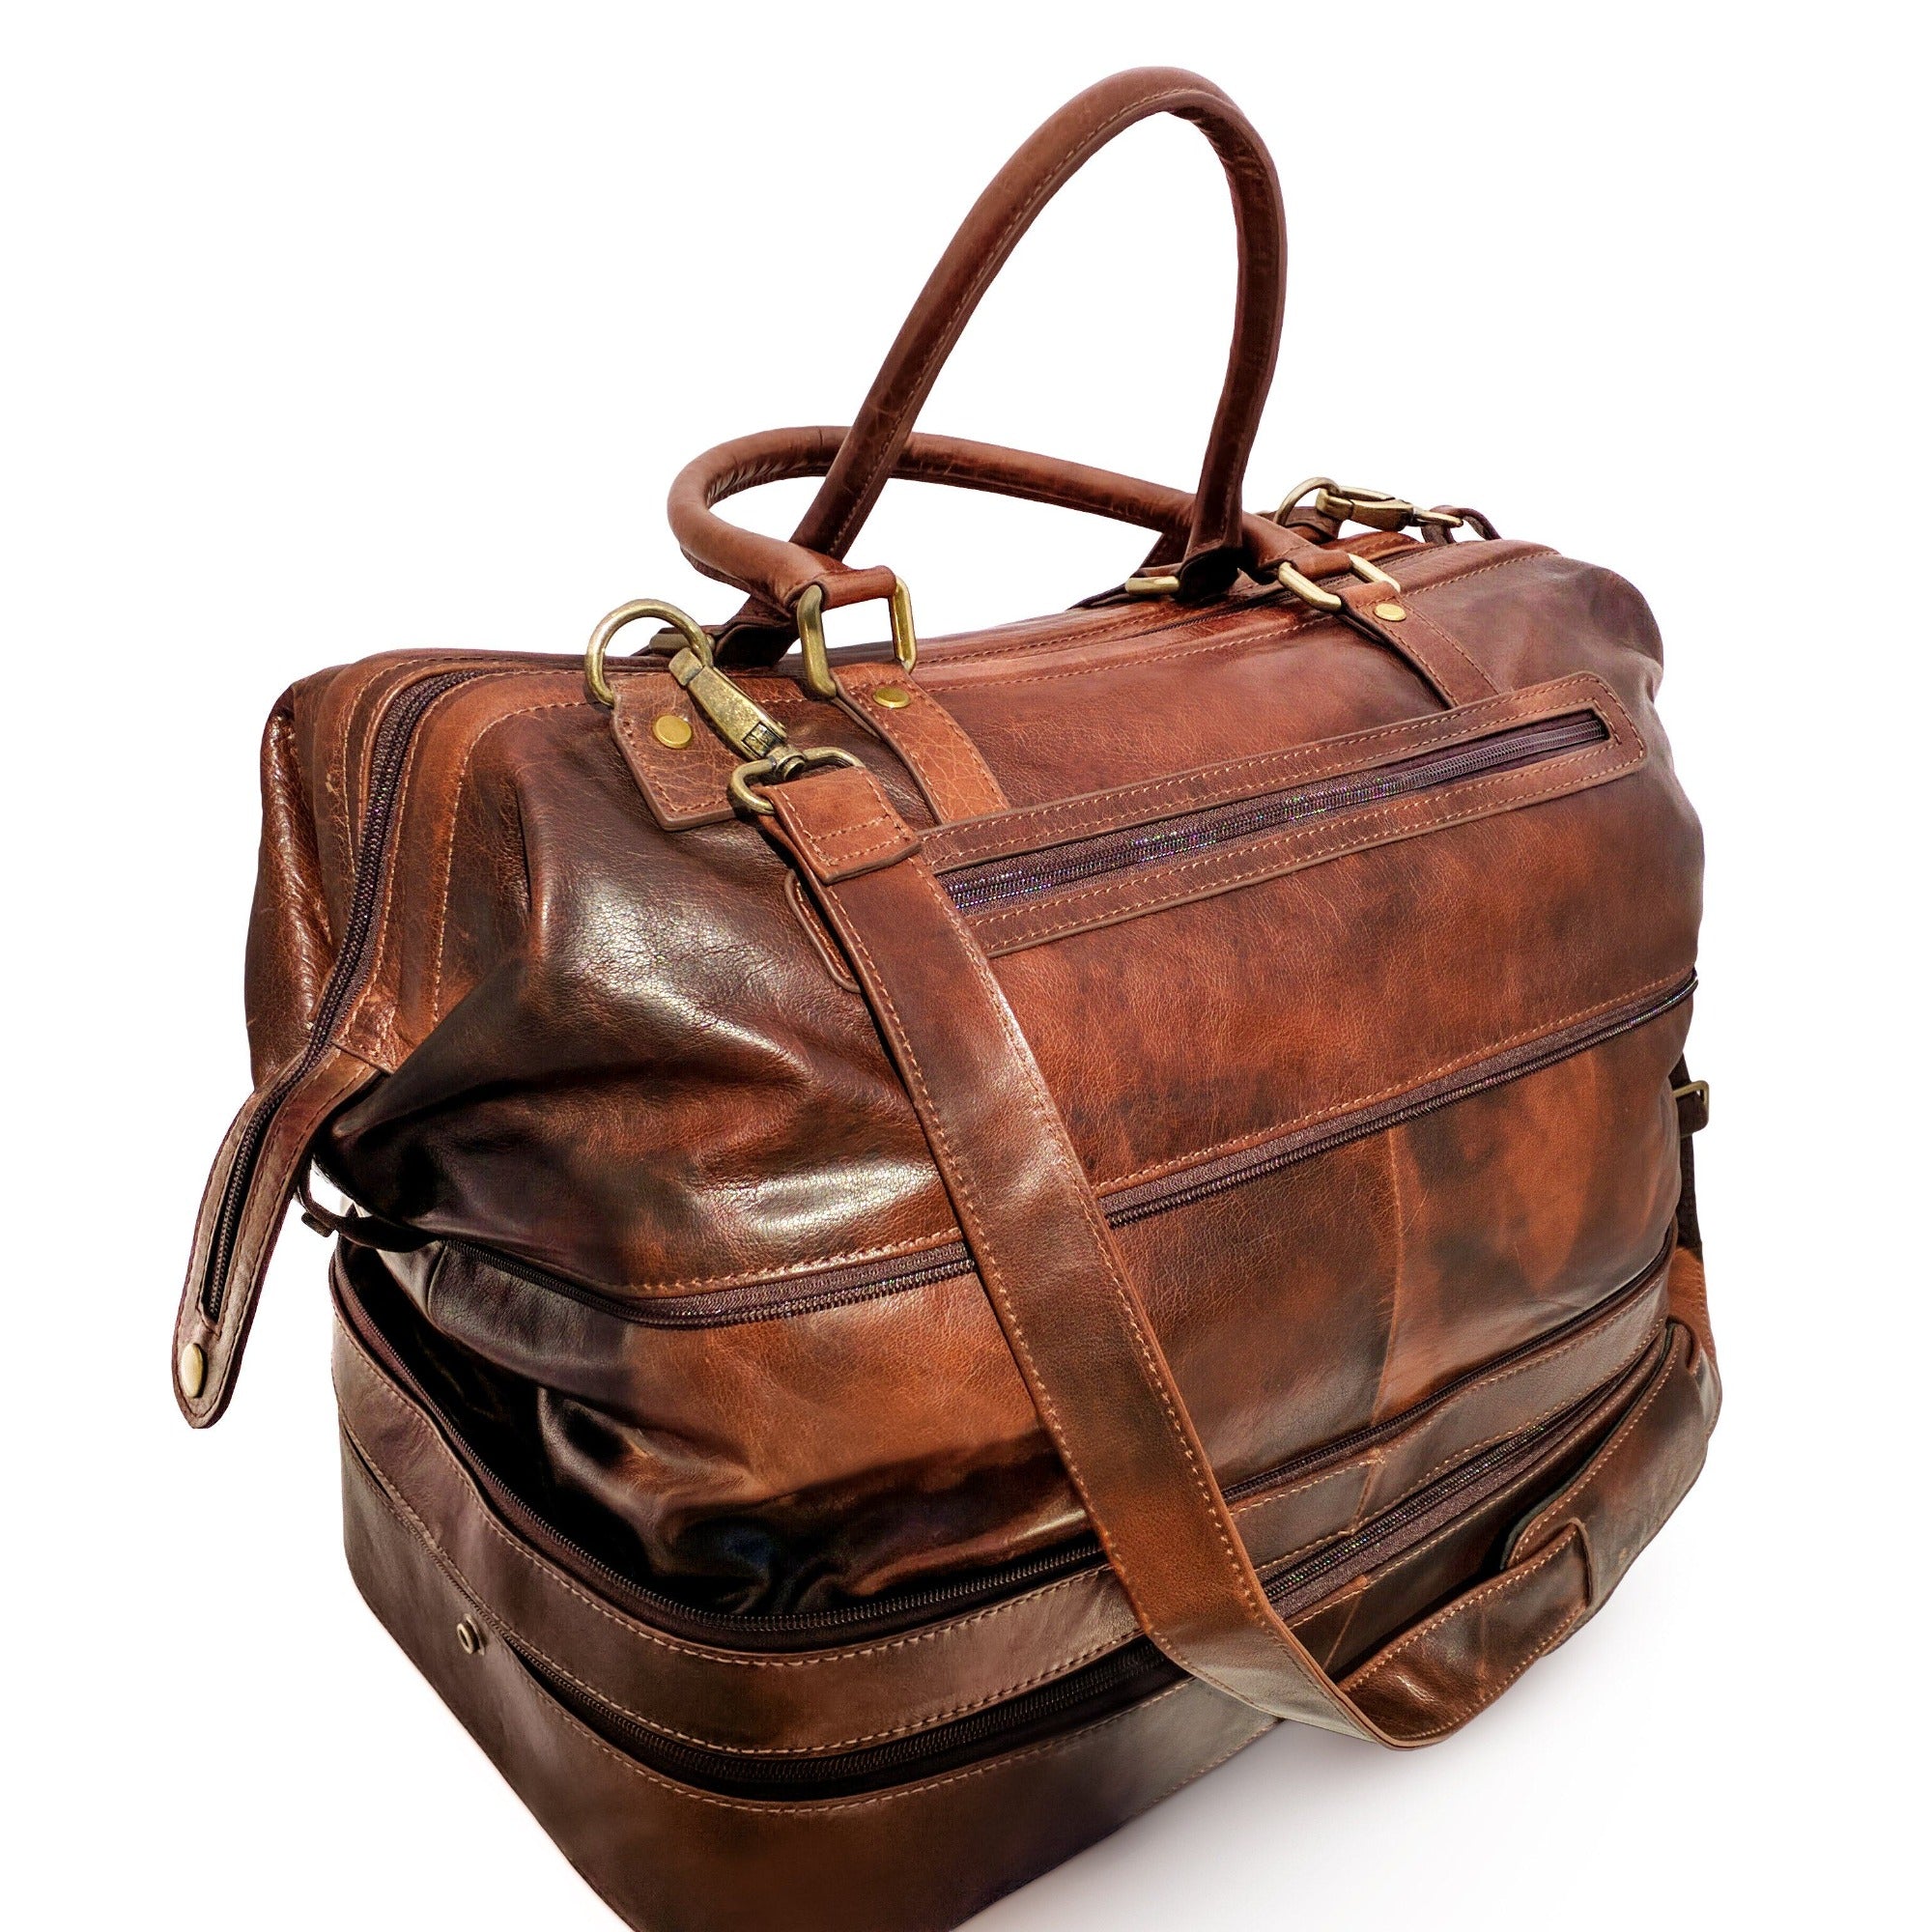 SFFashion™ Leather Weekender Duffel Bag w/ Shoe Compartment